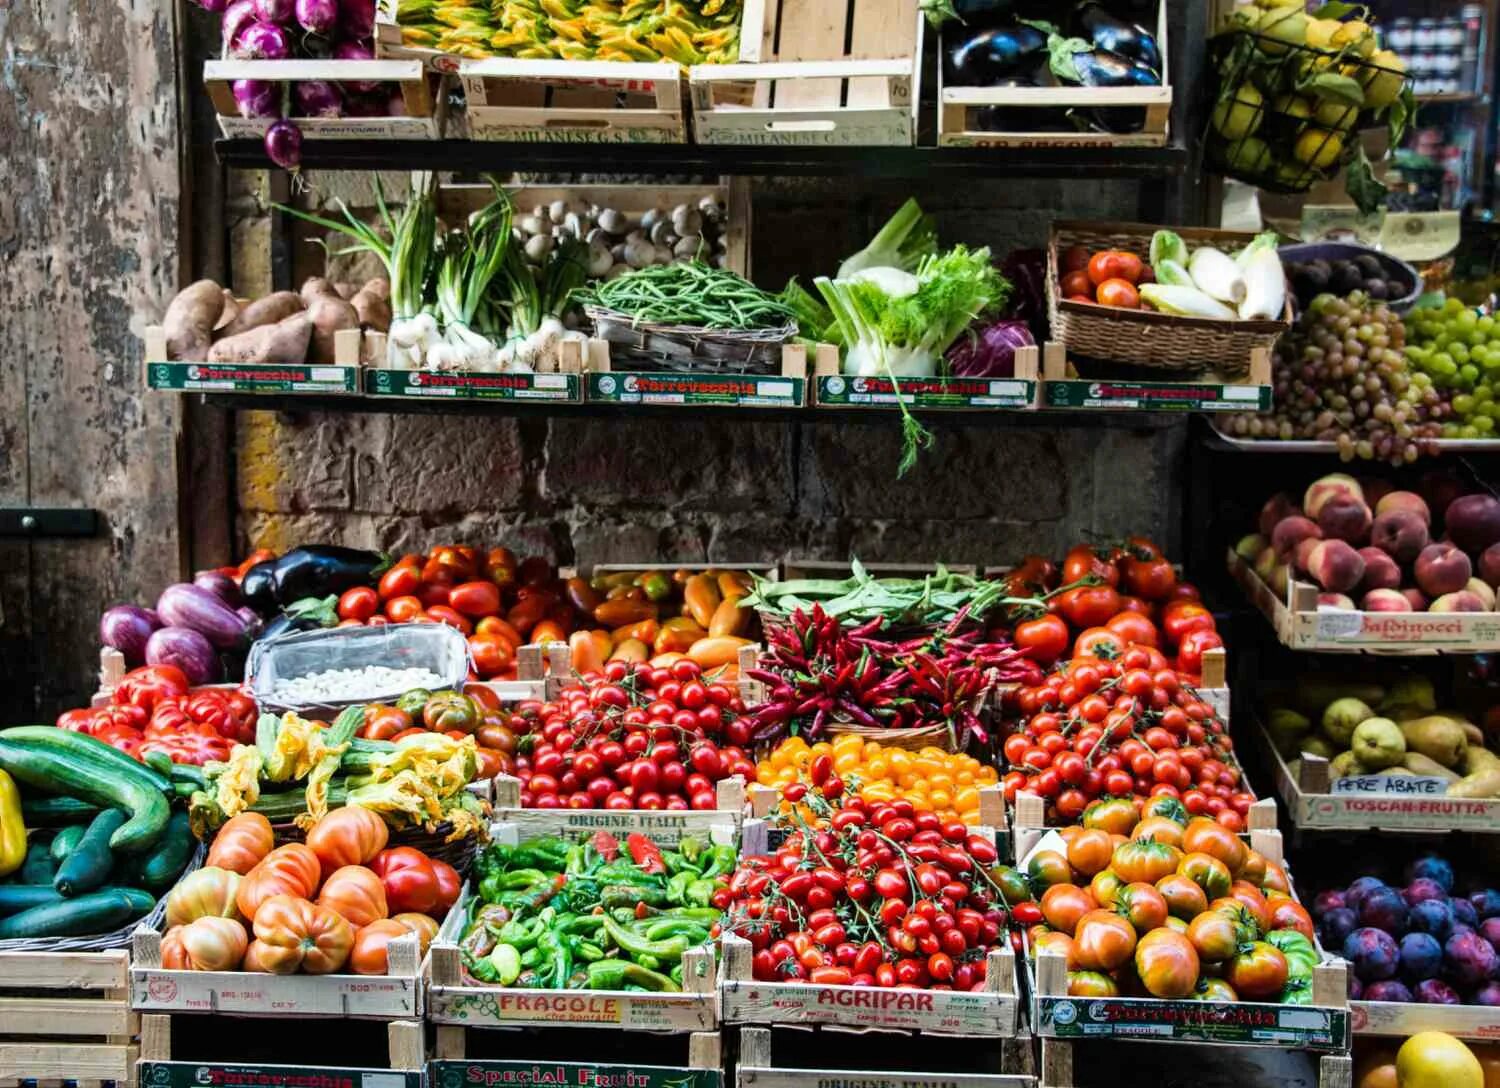 Various vegetables. Овощи фрукты сухофрукты. Food Market. Виндхук магазин Fruit and Vegetables. Market Stall.